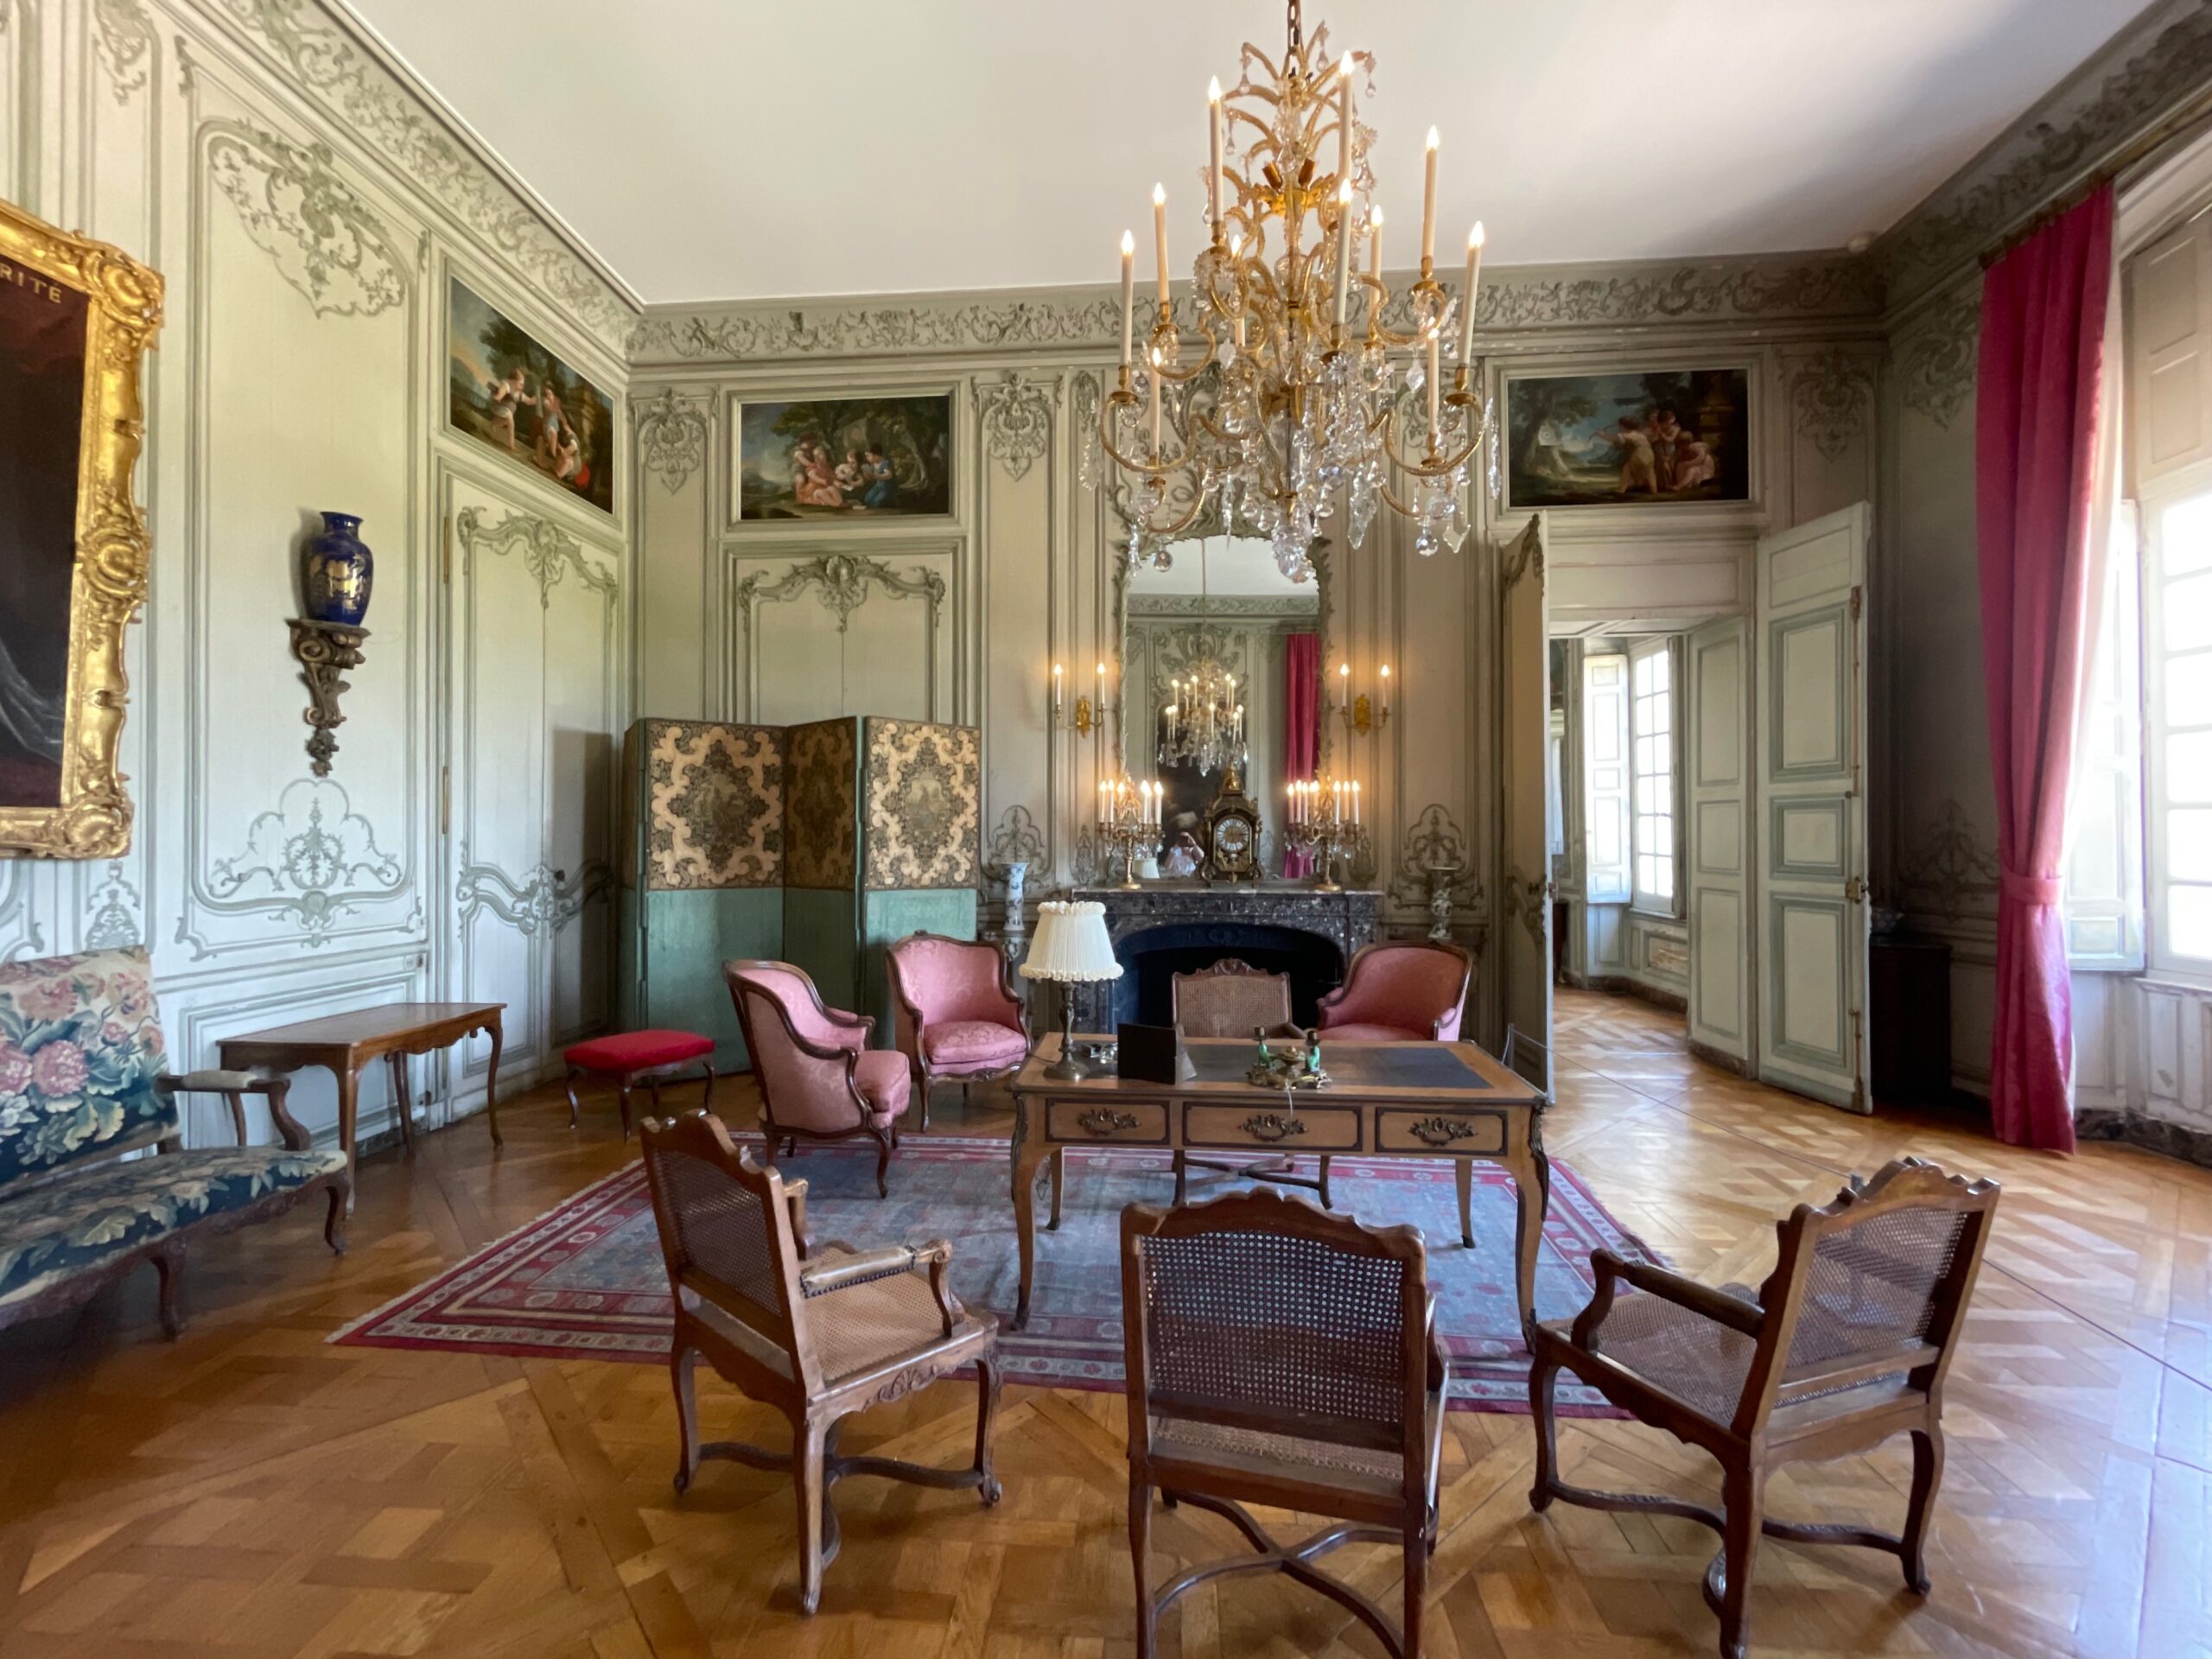 Château de Champs-sur-Marne – is it worth a visit?  Half a day trip to the charming neoclassical castle near Paris.